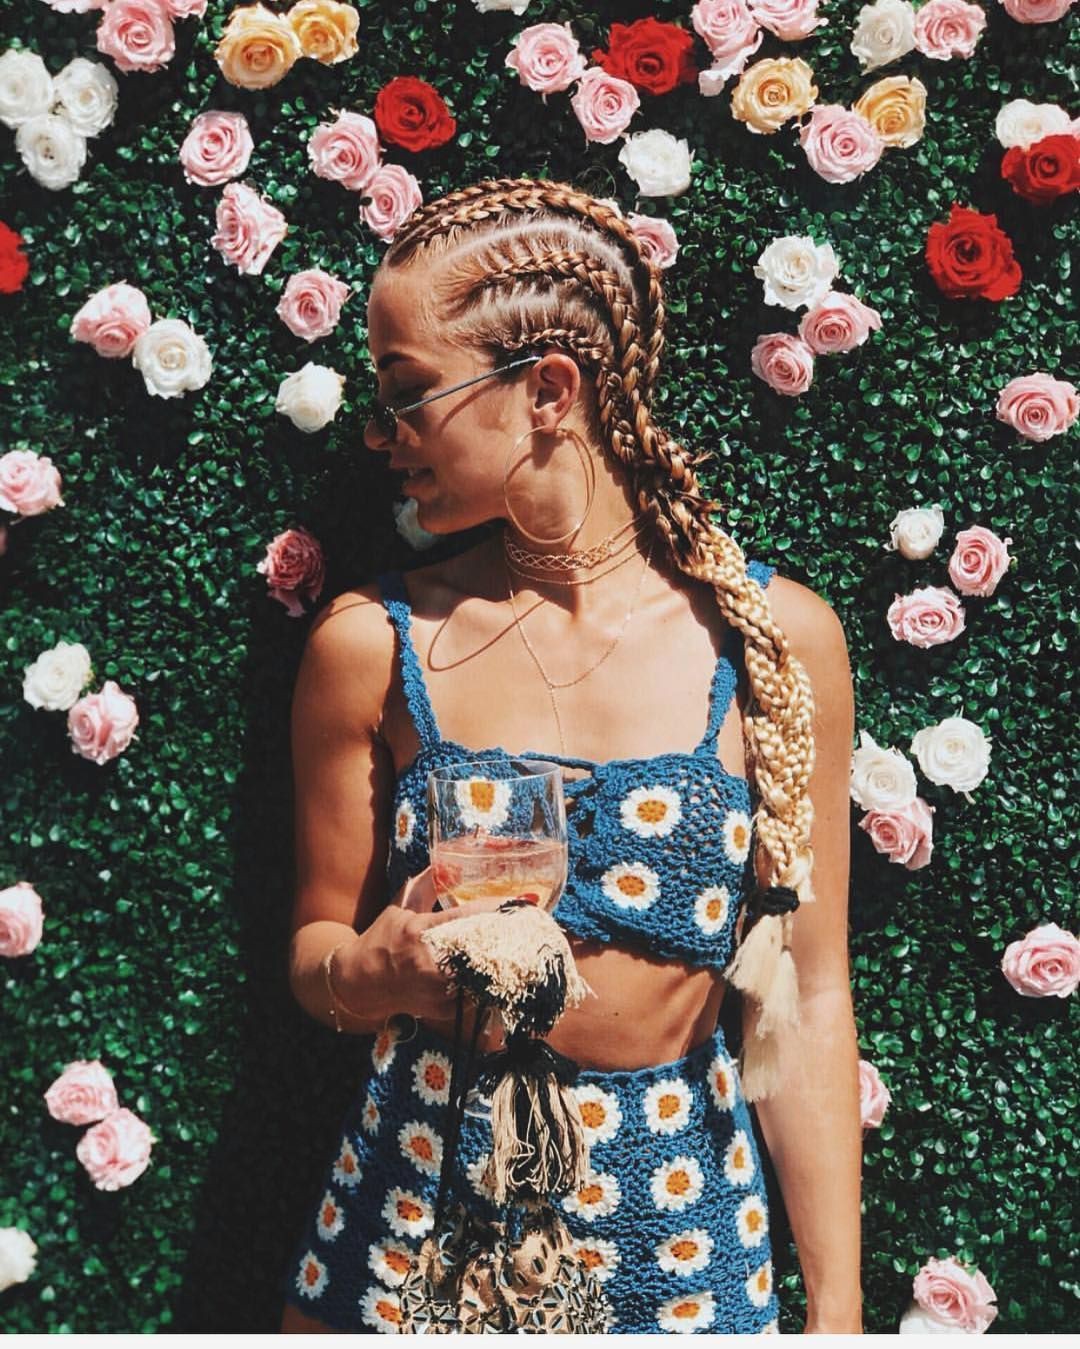 Yvette Arriaga accesorio de moda, ideas de color de diseño floral, fotografía de modelo: Diseño floral,  Atuendos De Coachella,  Accesorio de moda  